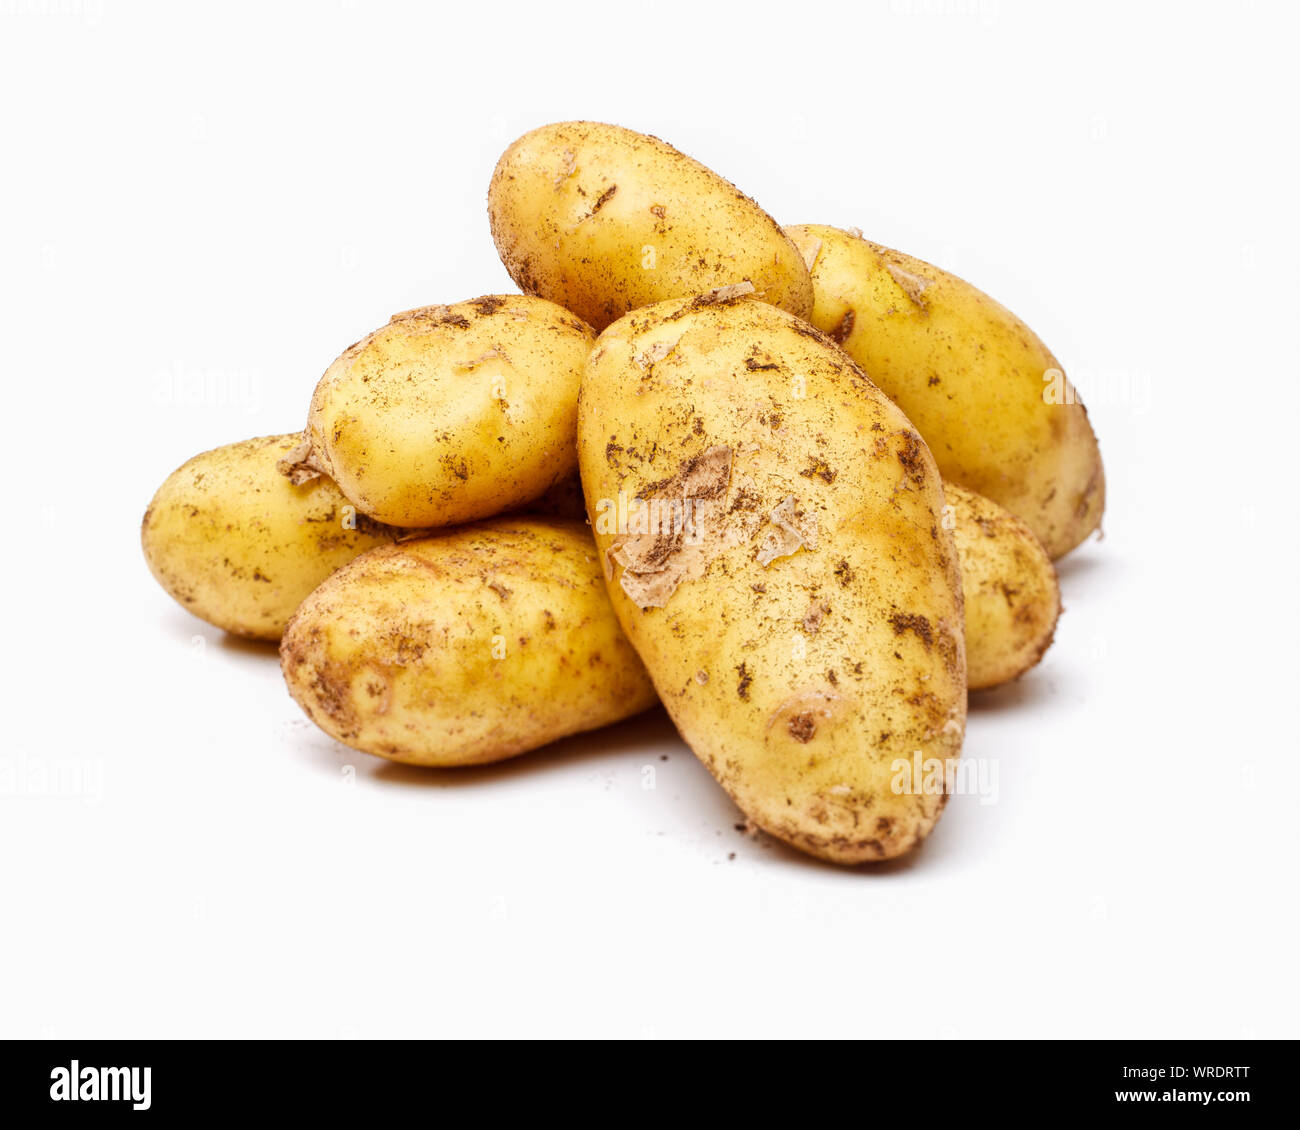 New potatoes on a white background Stock Photo